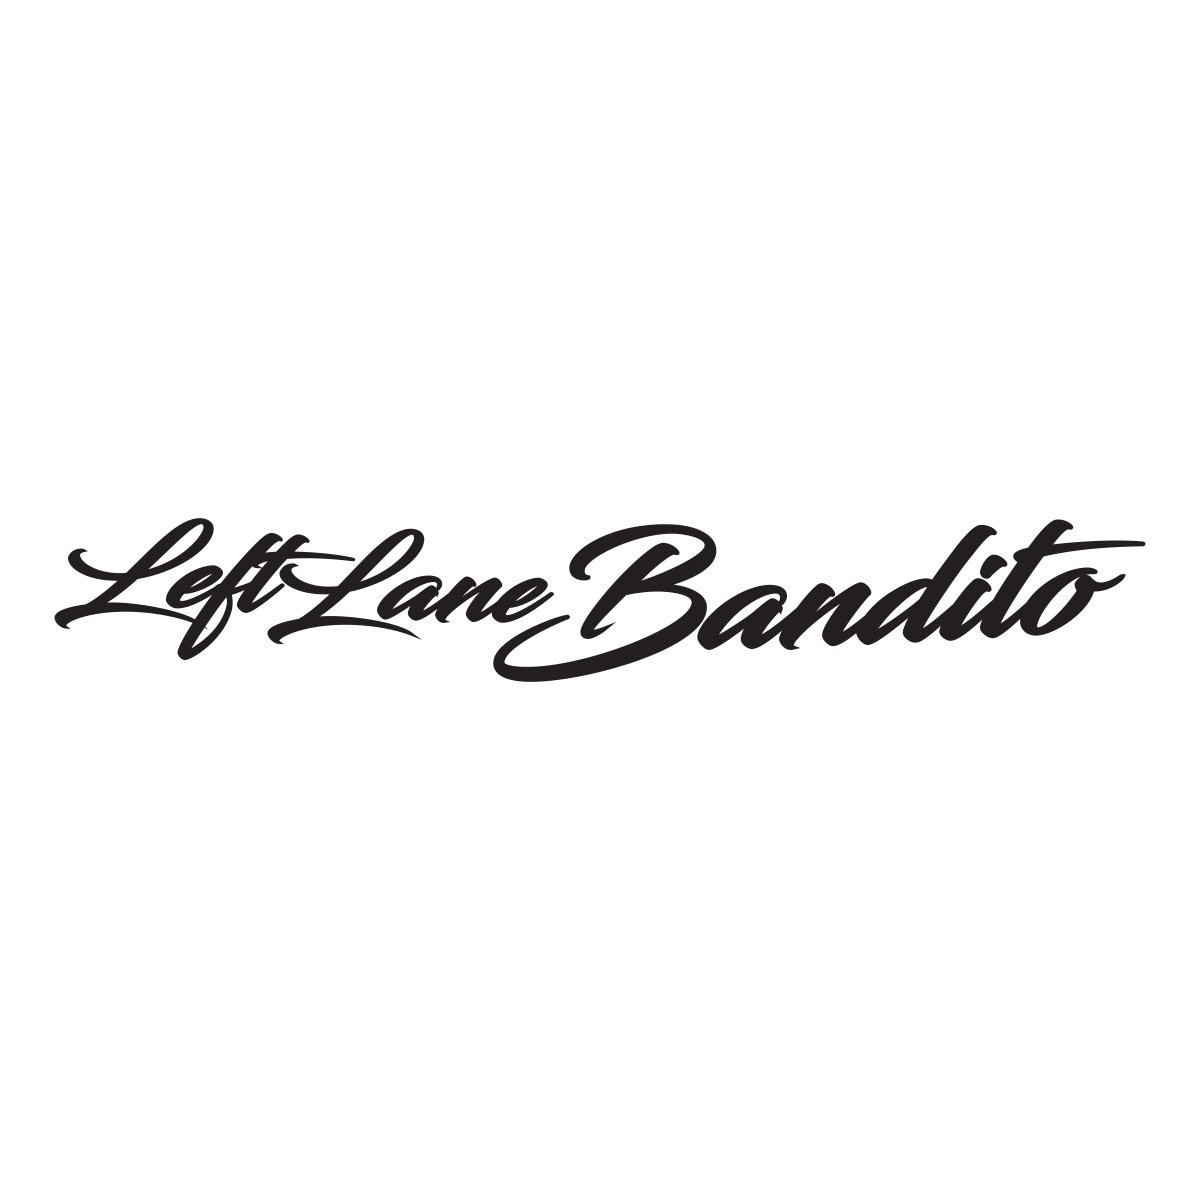 left lane bandito